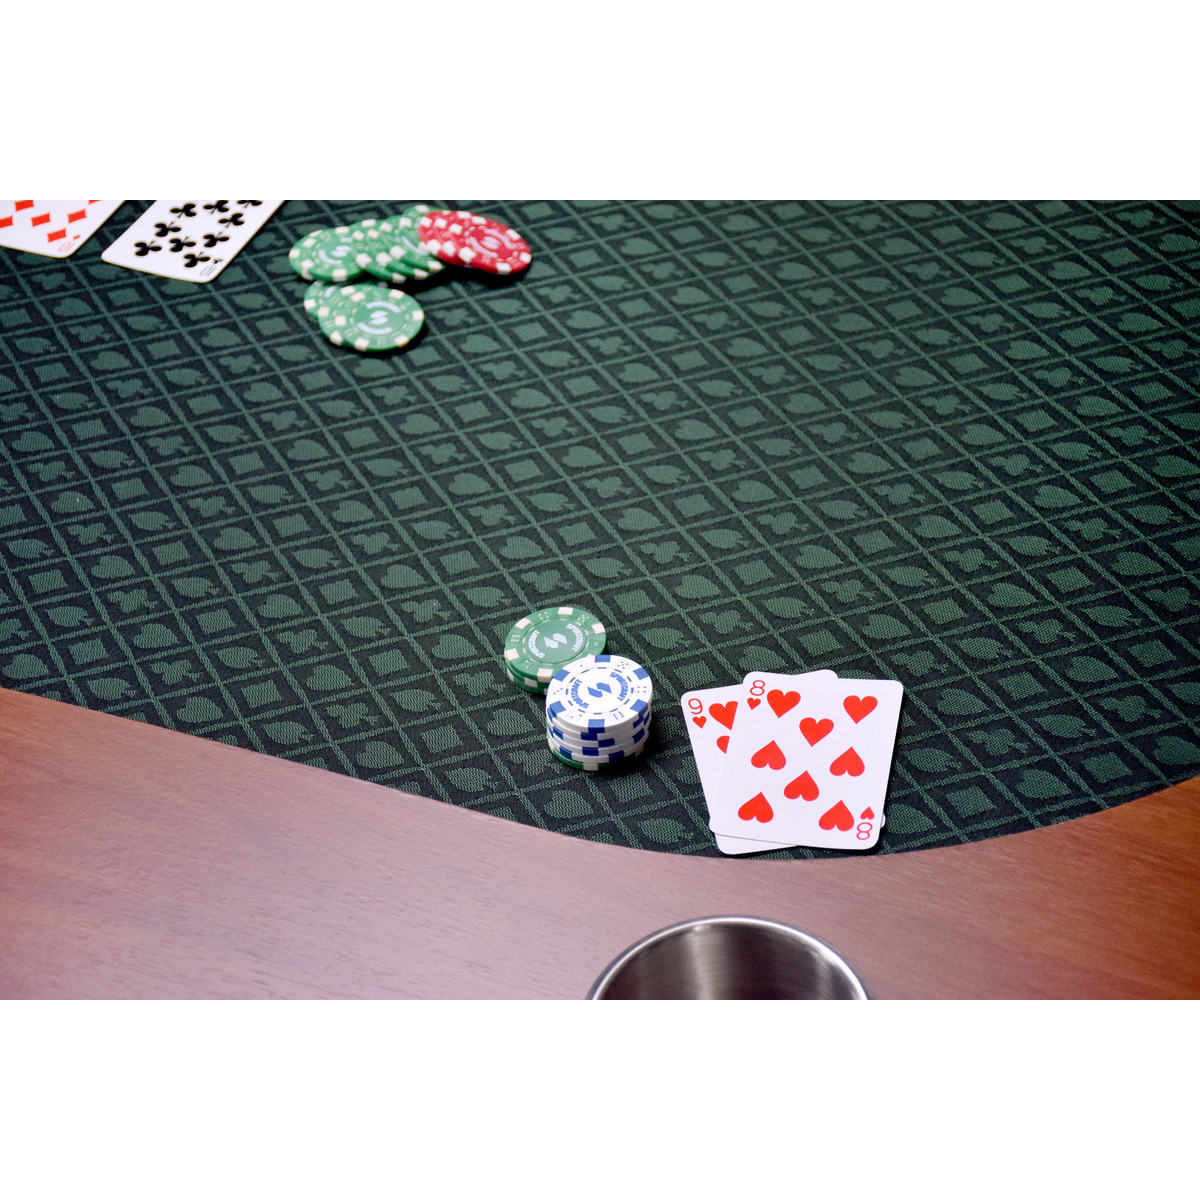 North Poker Table Foldy 10 Personnes Vert